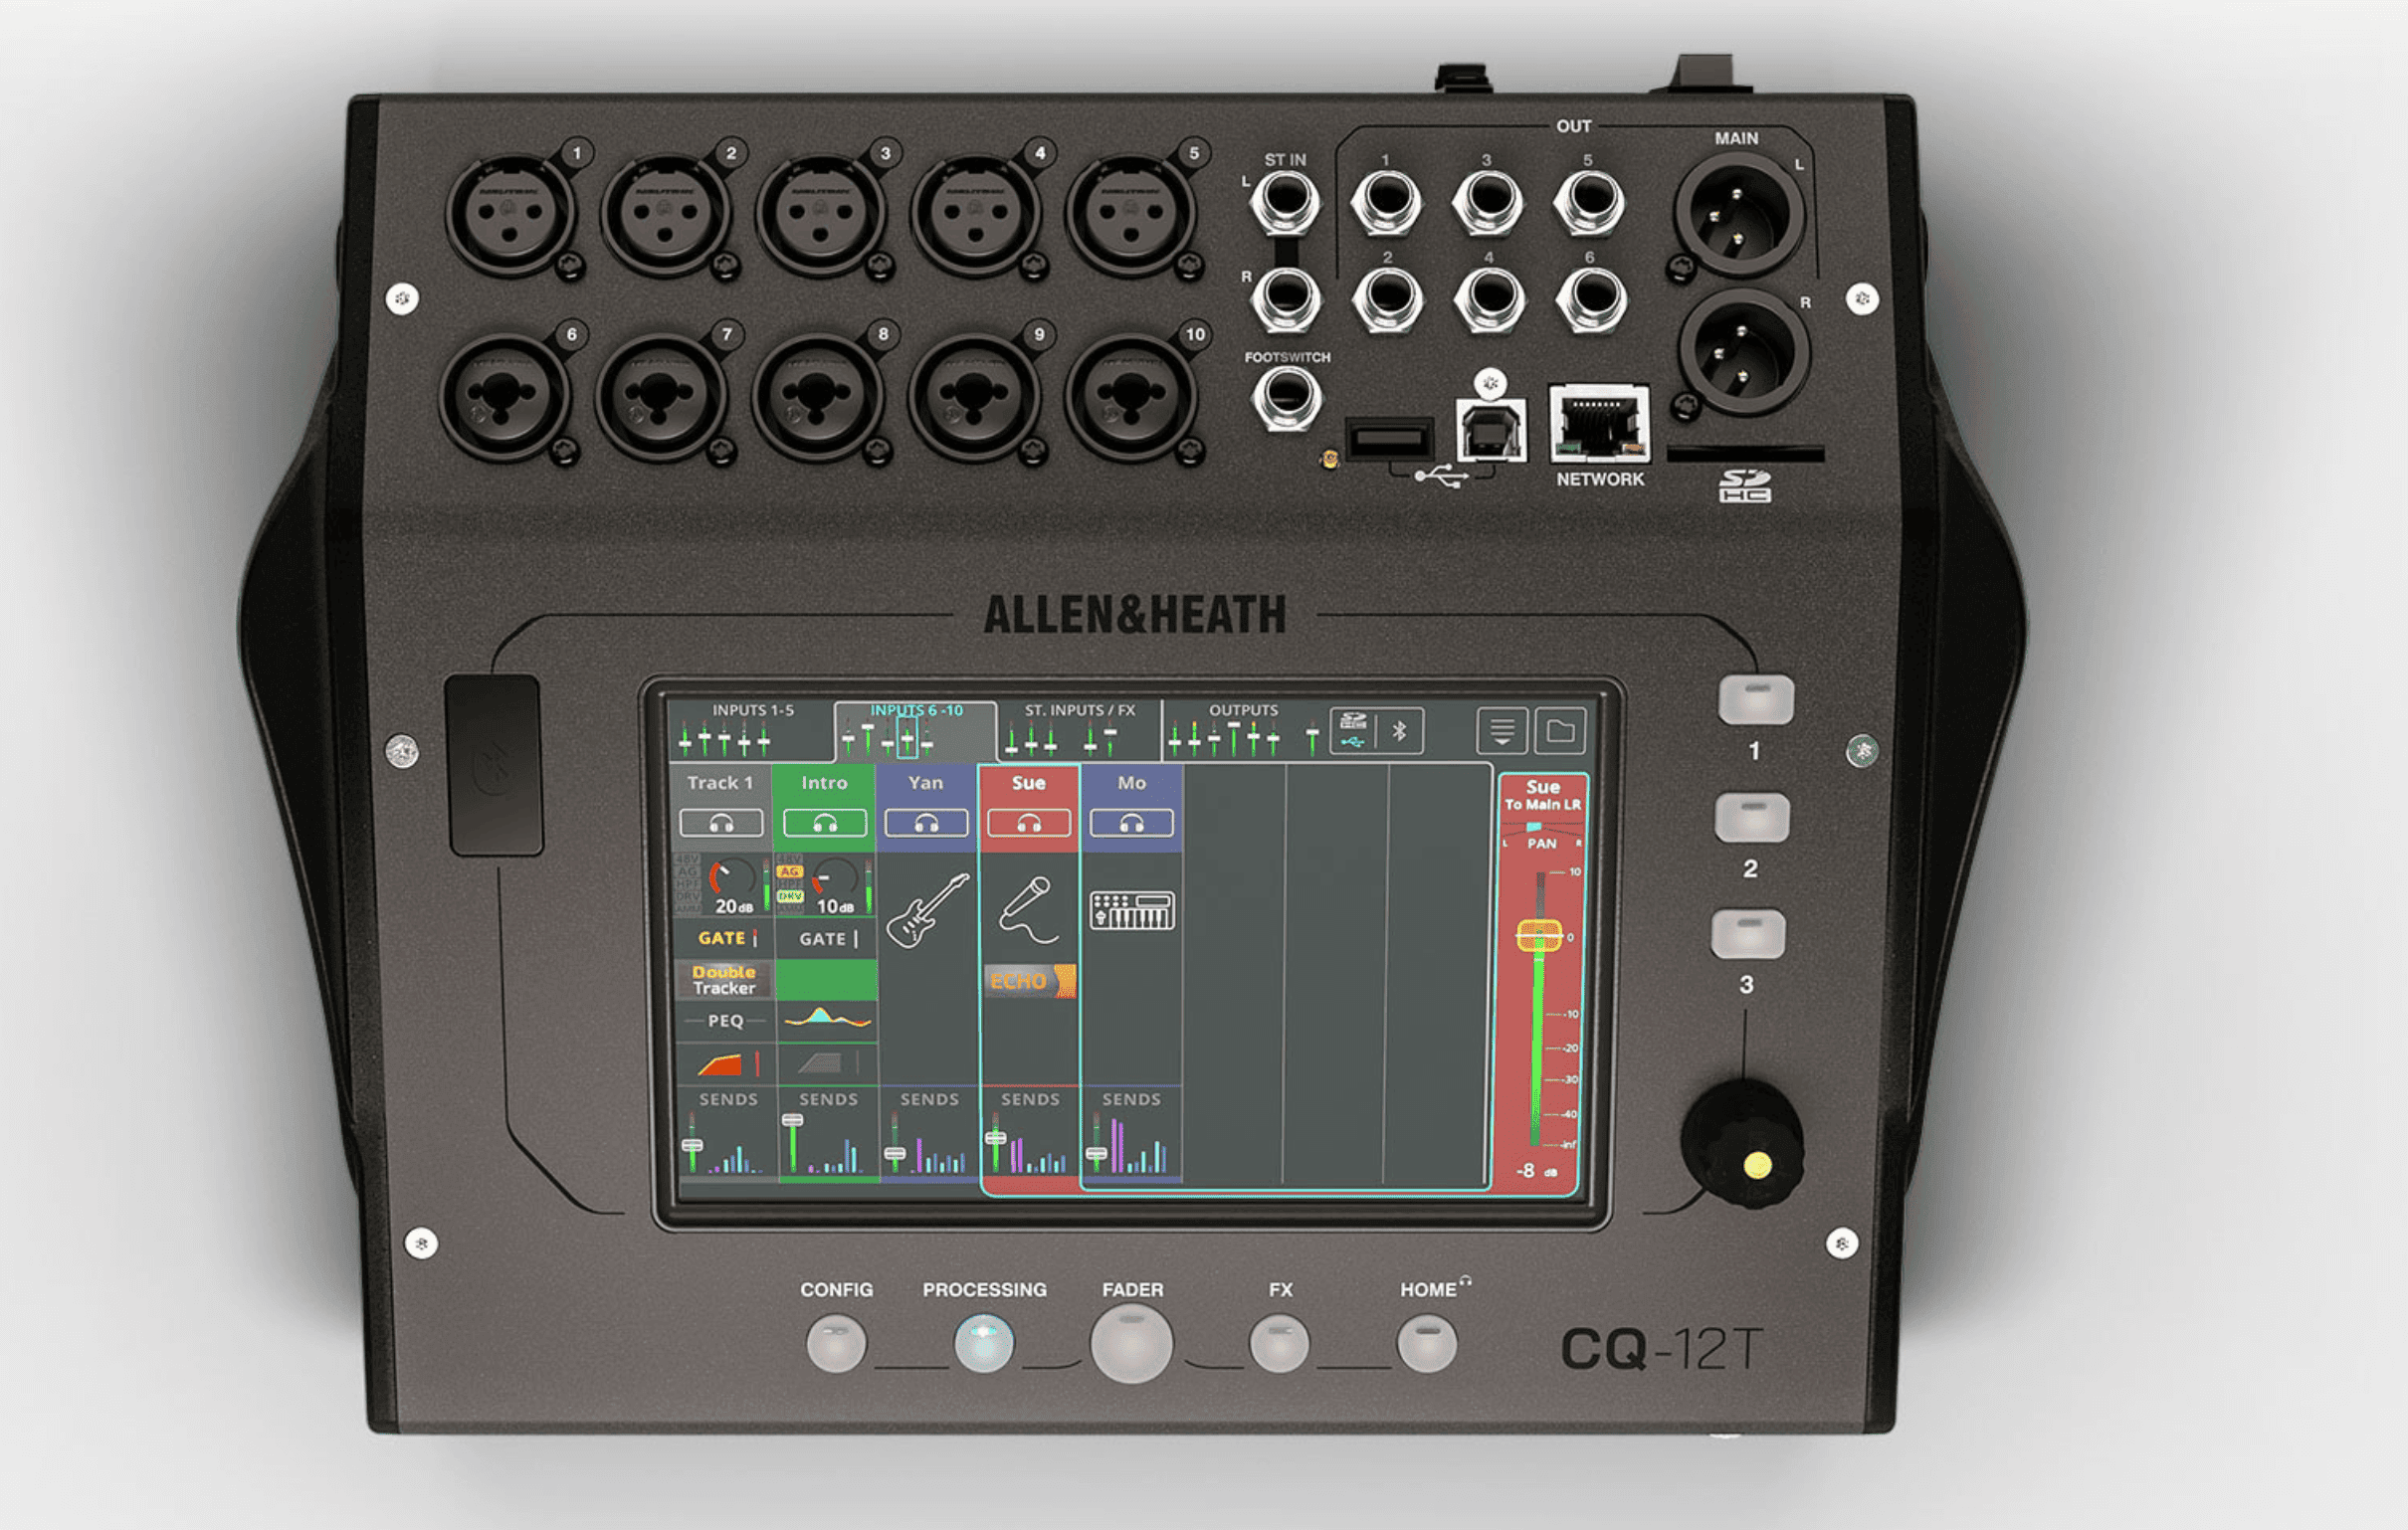 Allen & Heath reveal new CQ series digital mixers